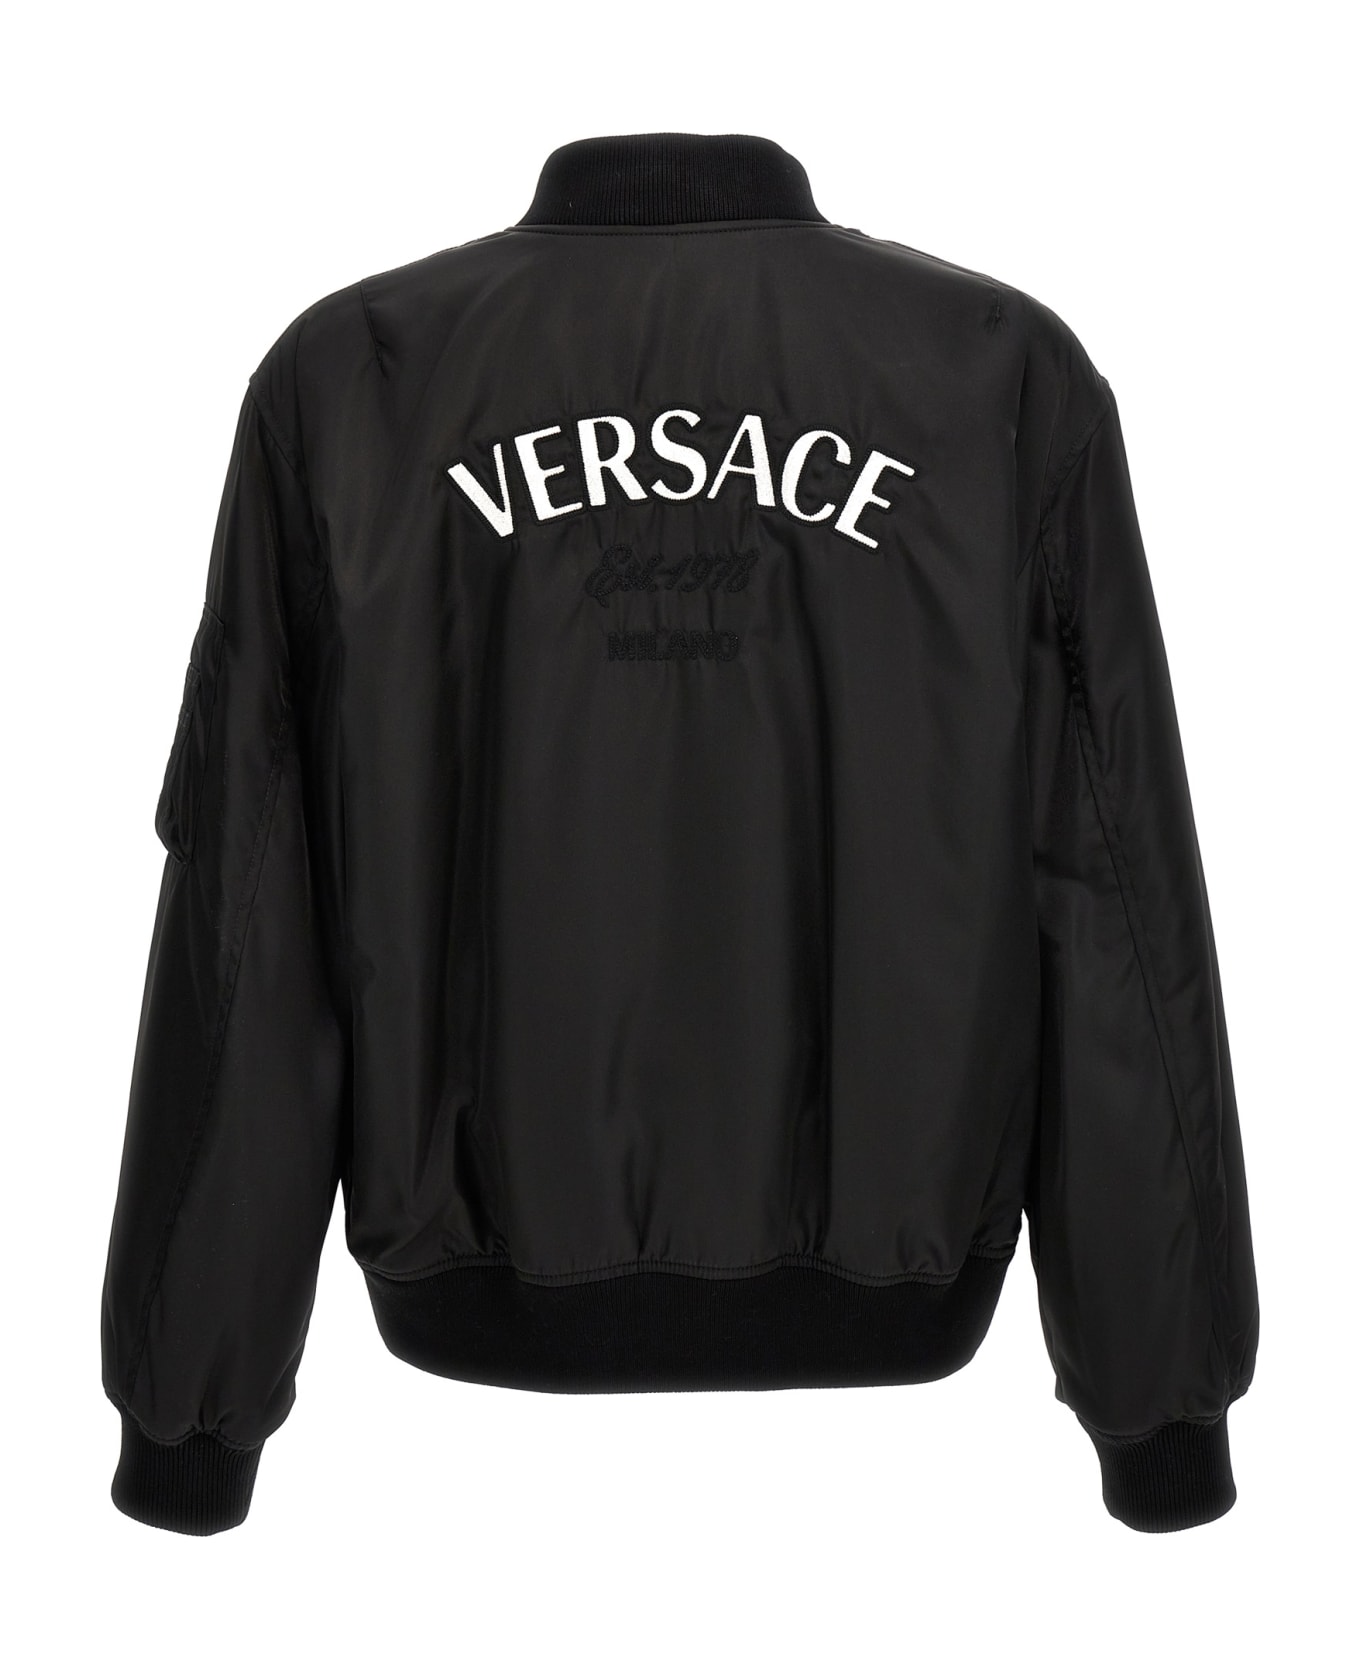 Versace Logo Bomber Jacket - Black ジャケット